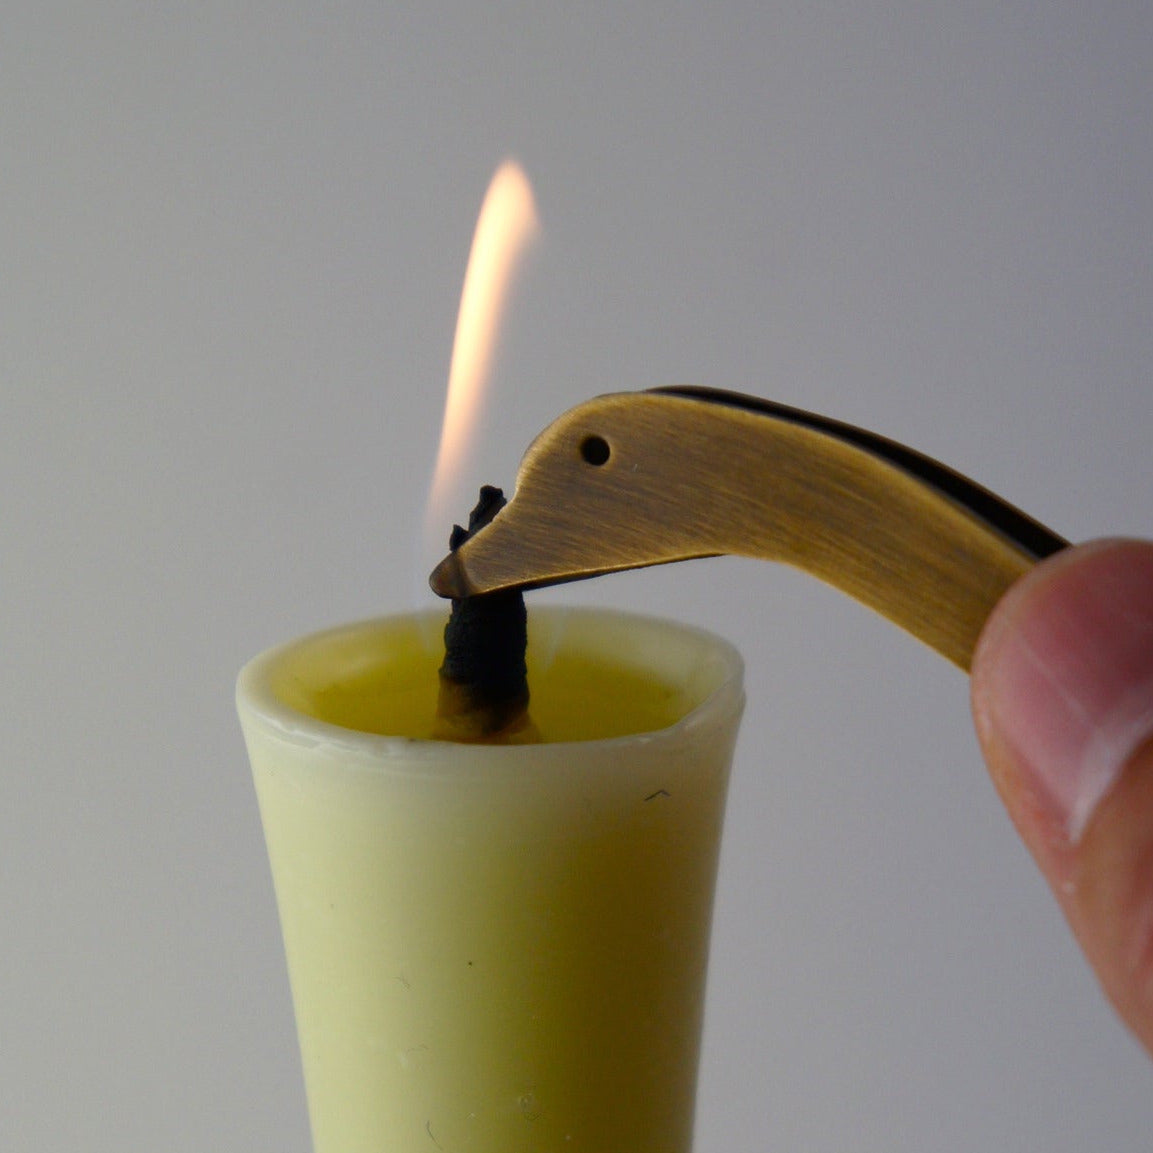 TAKAZAWA CANDLE Kerzenlöscher in Entenform aus Messing Made in Japan